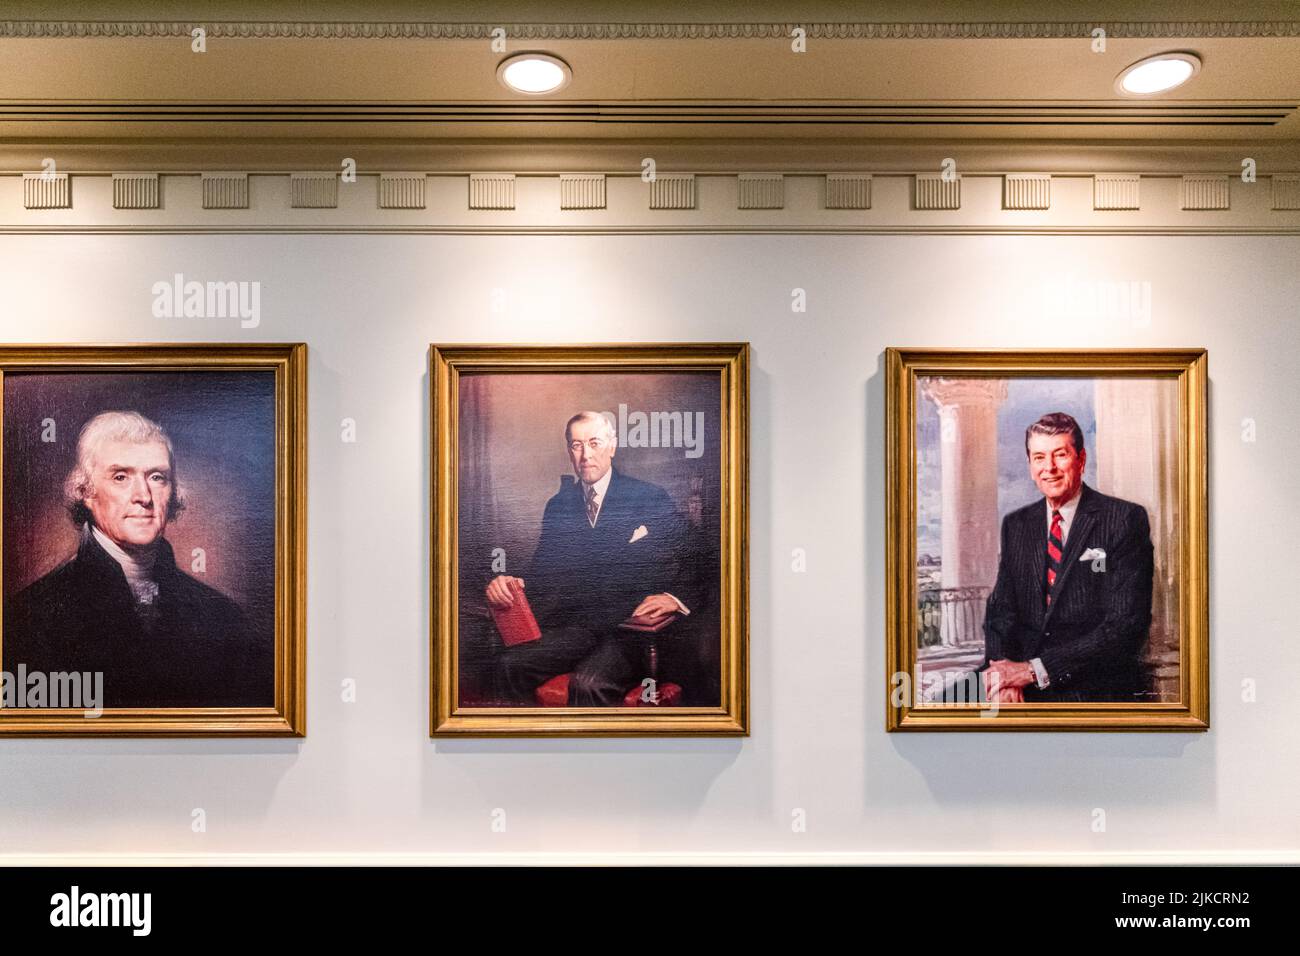 Porträts von Thomas Jefferson, Woodrow Wilson, Ronald Reagan in der Hall of Presidents Stockfoto